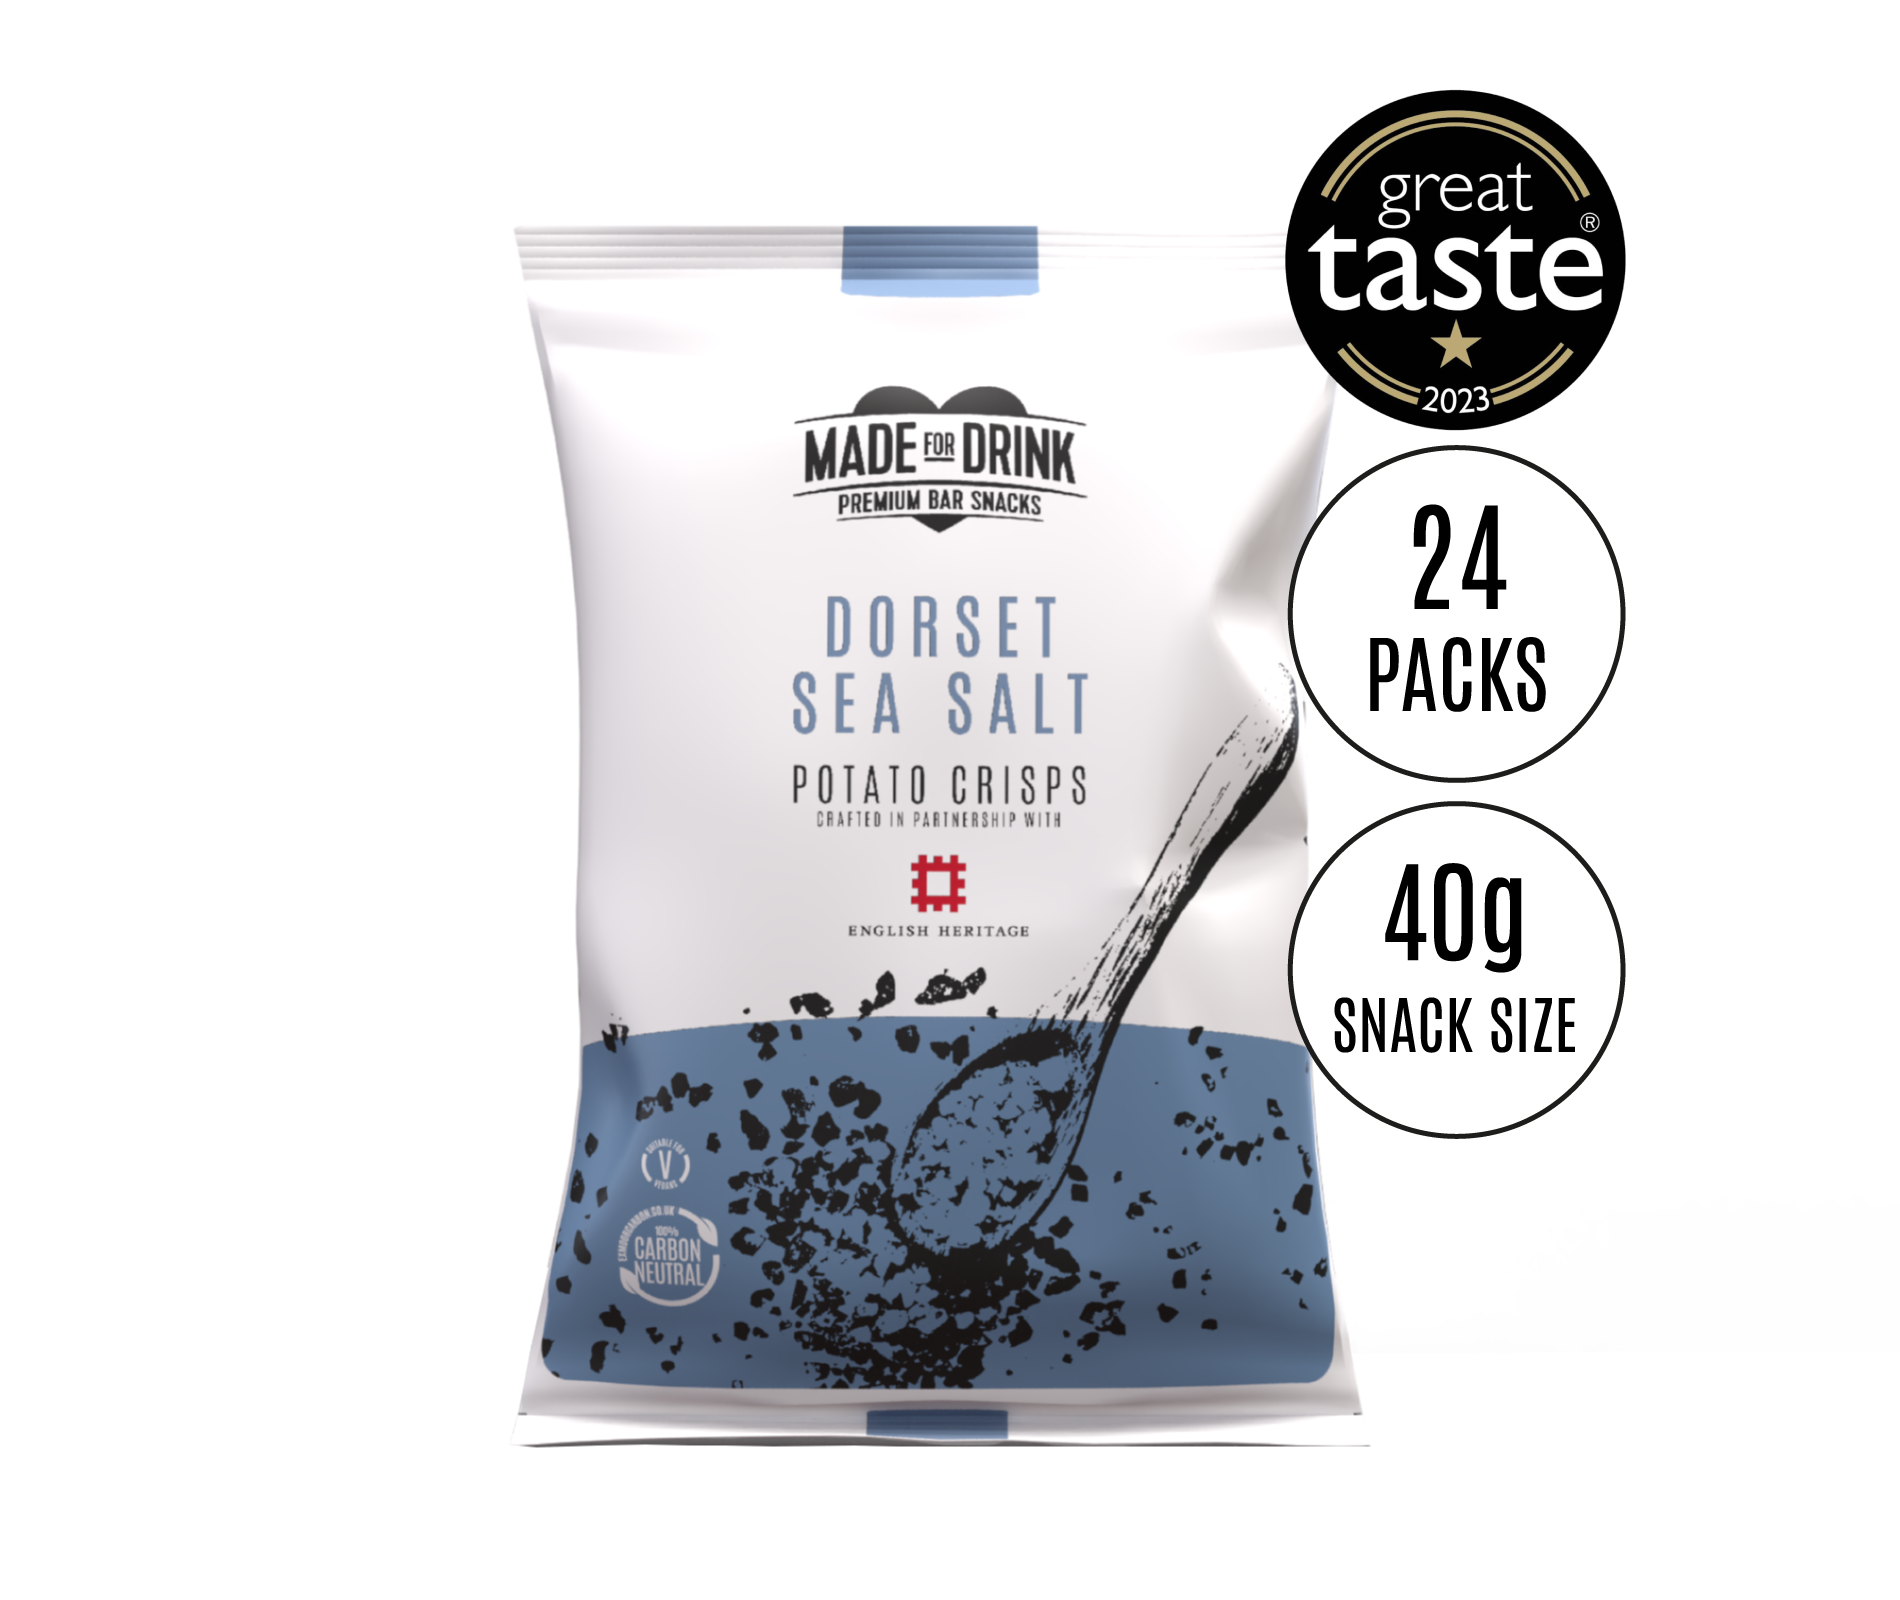 A 40g pack of Made For Drink's Dorset Sea Salt Crisps with the 1 star Great Taste Award 2023 logo.